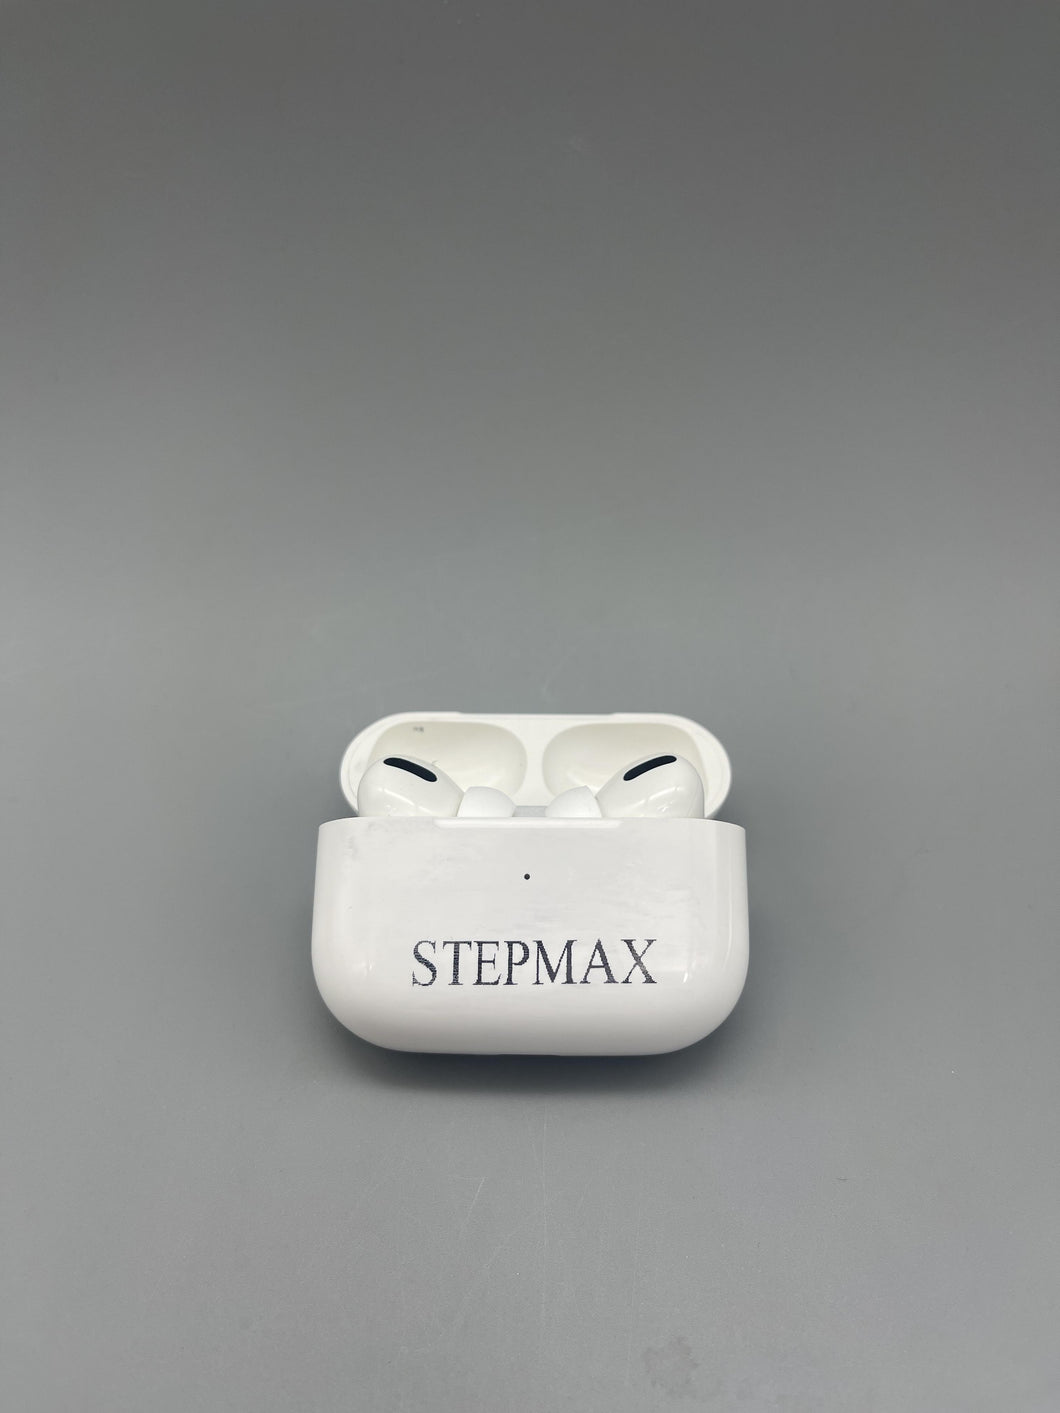 STEPMAX earphones，Wireless headsets for smartphones,Wireless Earbuds, Bluetooth Headphones, Stereo Earphone, Cordless Sport Headsets, Earphones with Built-in Mic for Smart Phones, White